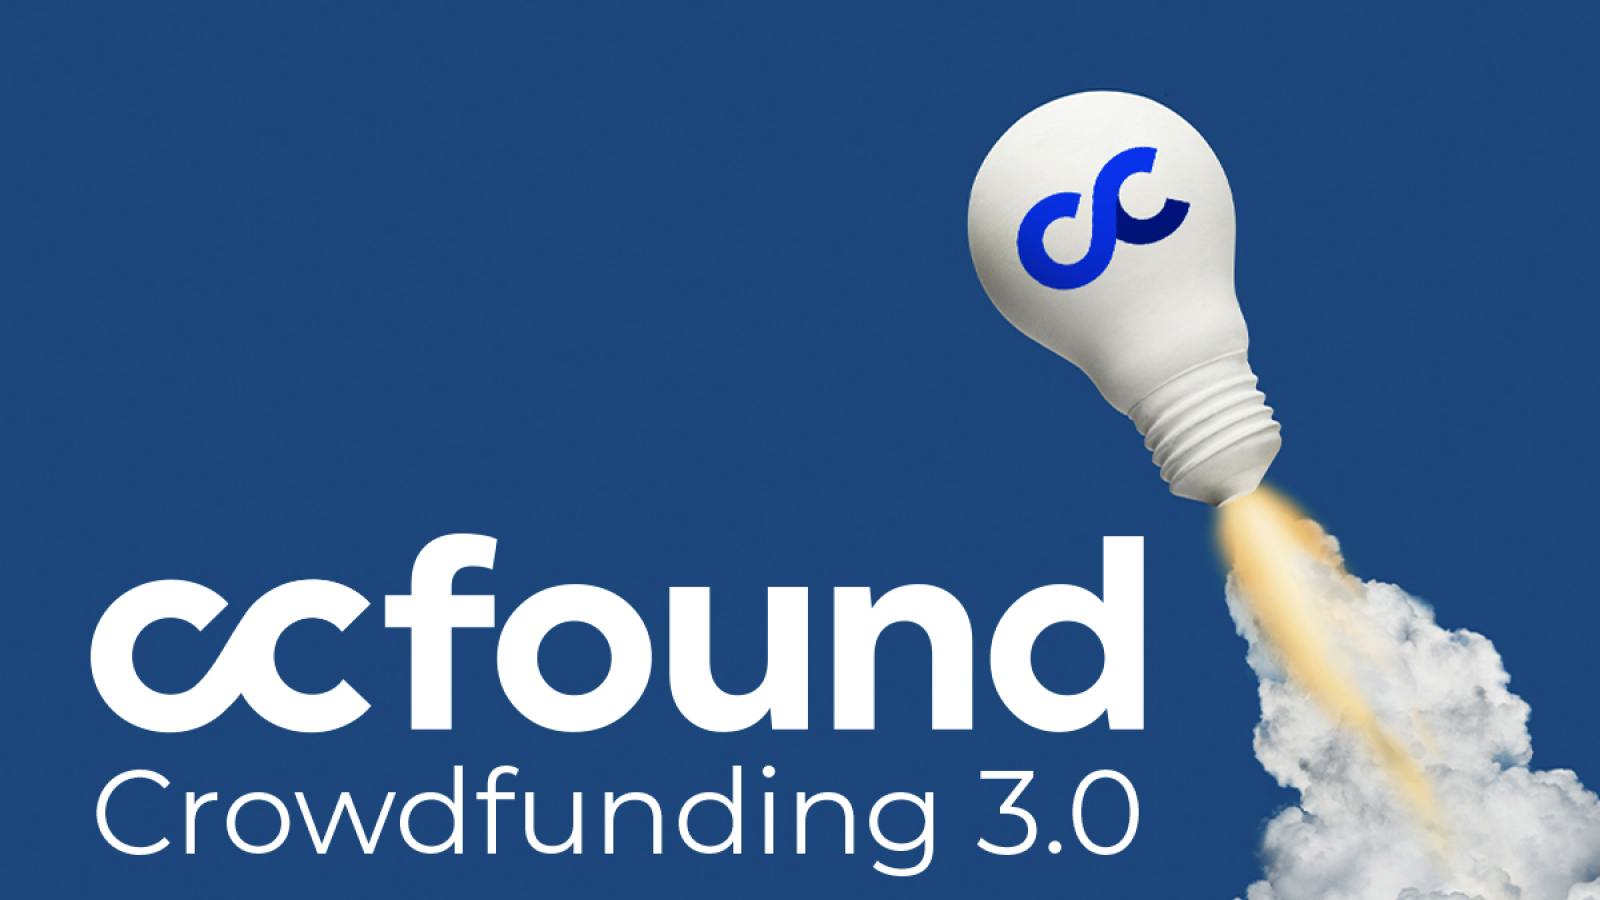 ccFOUND.com – Crowdfunding 3.0 Has Already Started!